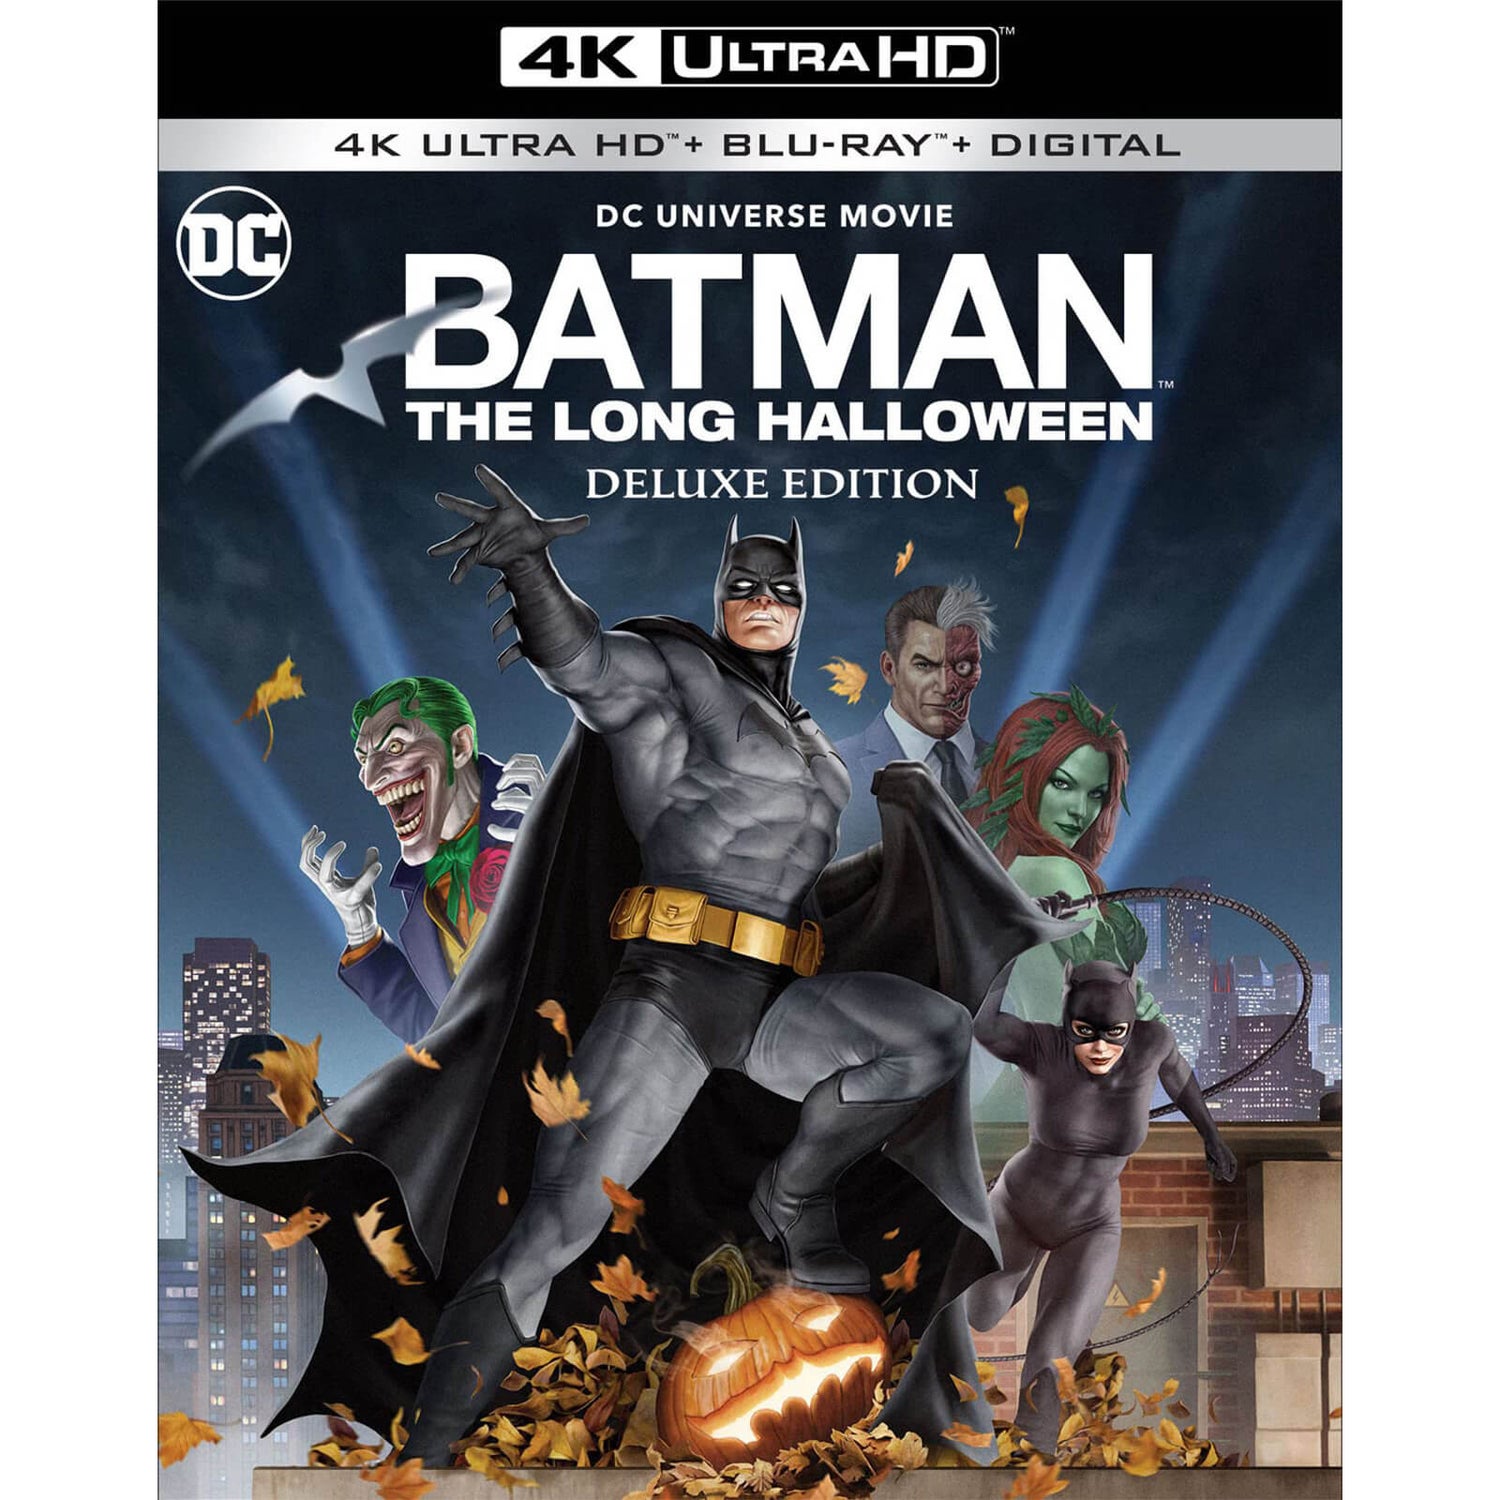 Batman: The Long Halloween Deluxe Exition 4K Ultra HD (Includes Blu-ray Digital)